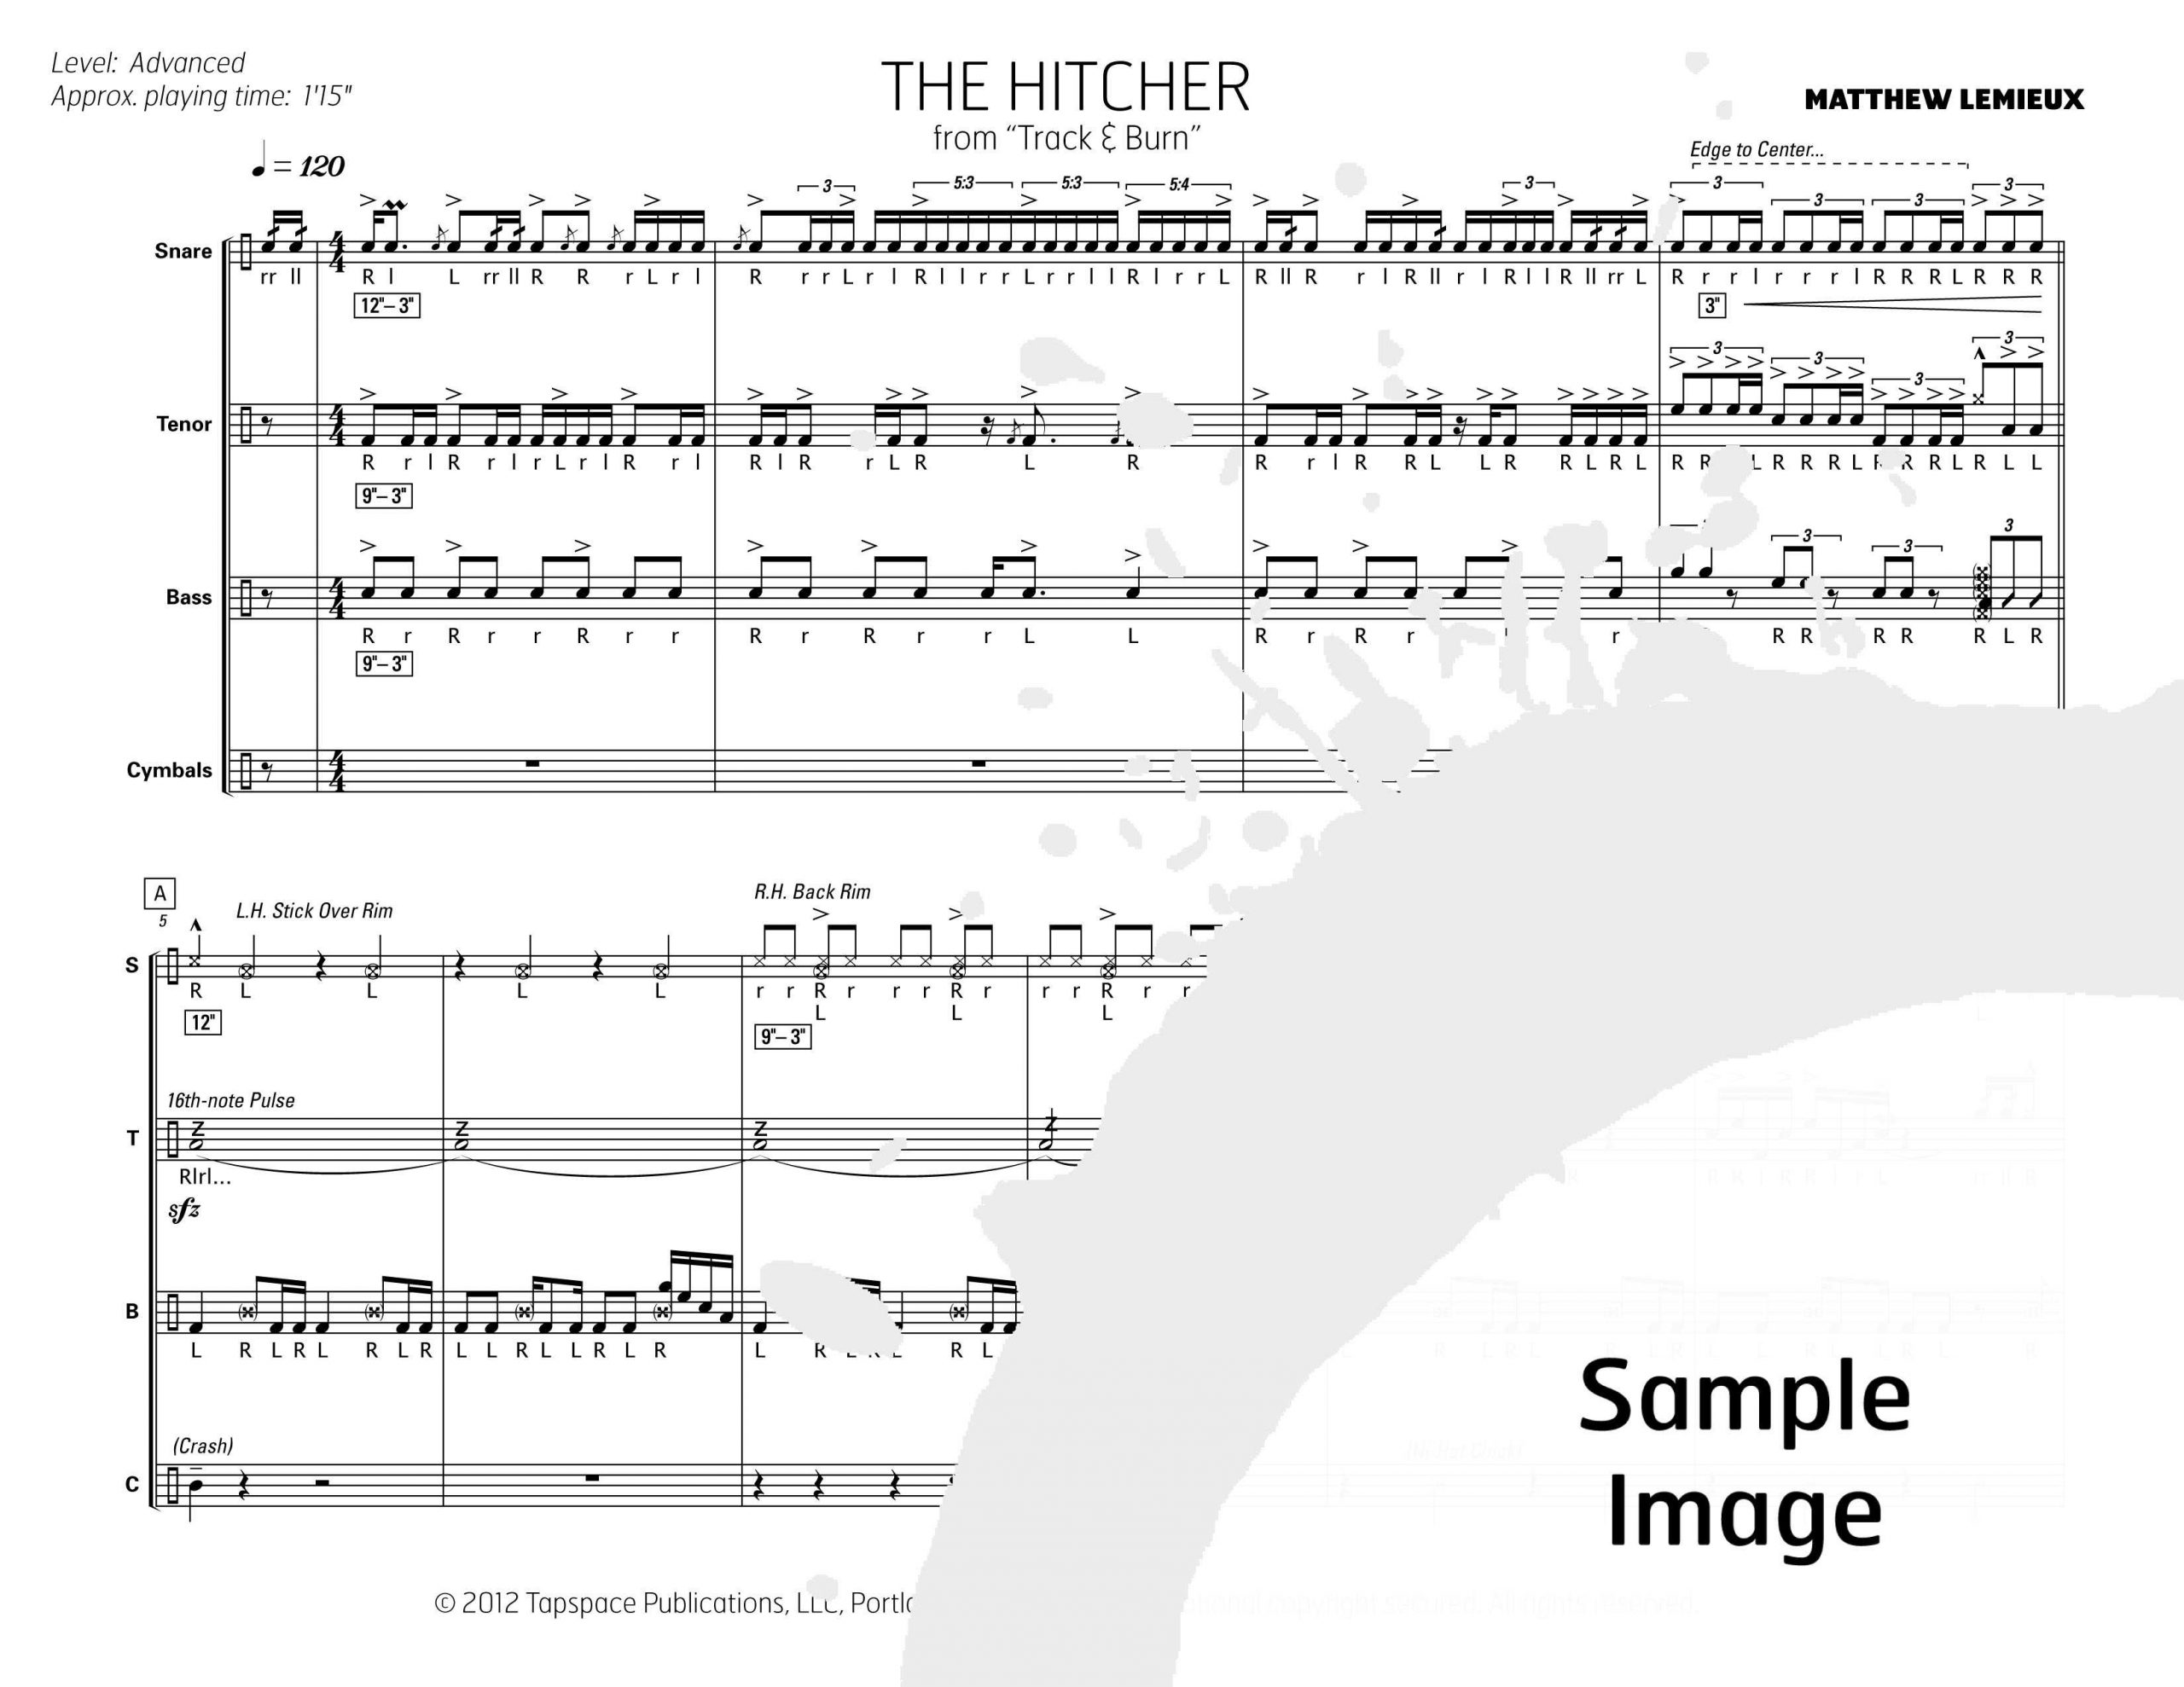 The Hitcher by Matthew Lemieux